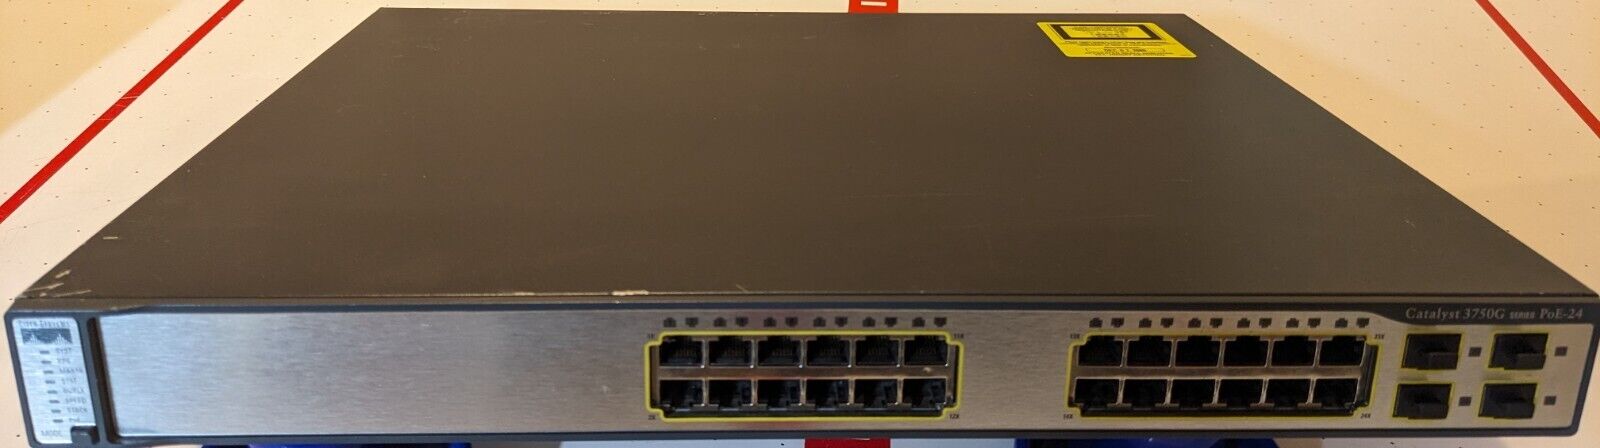 Cisco WS-C3750G-24PS-S 24 Port PoE 10/100/1000 Gigabit Switch TESTED